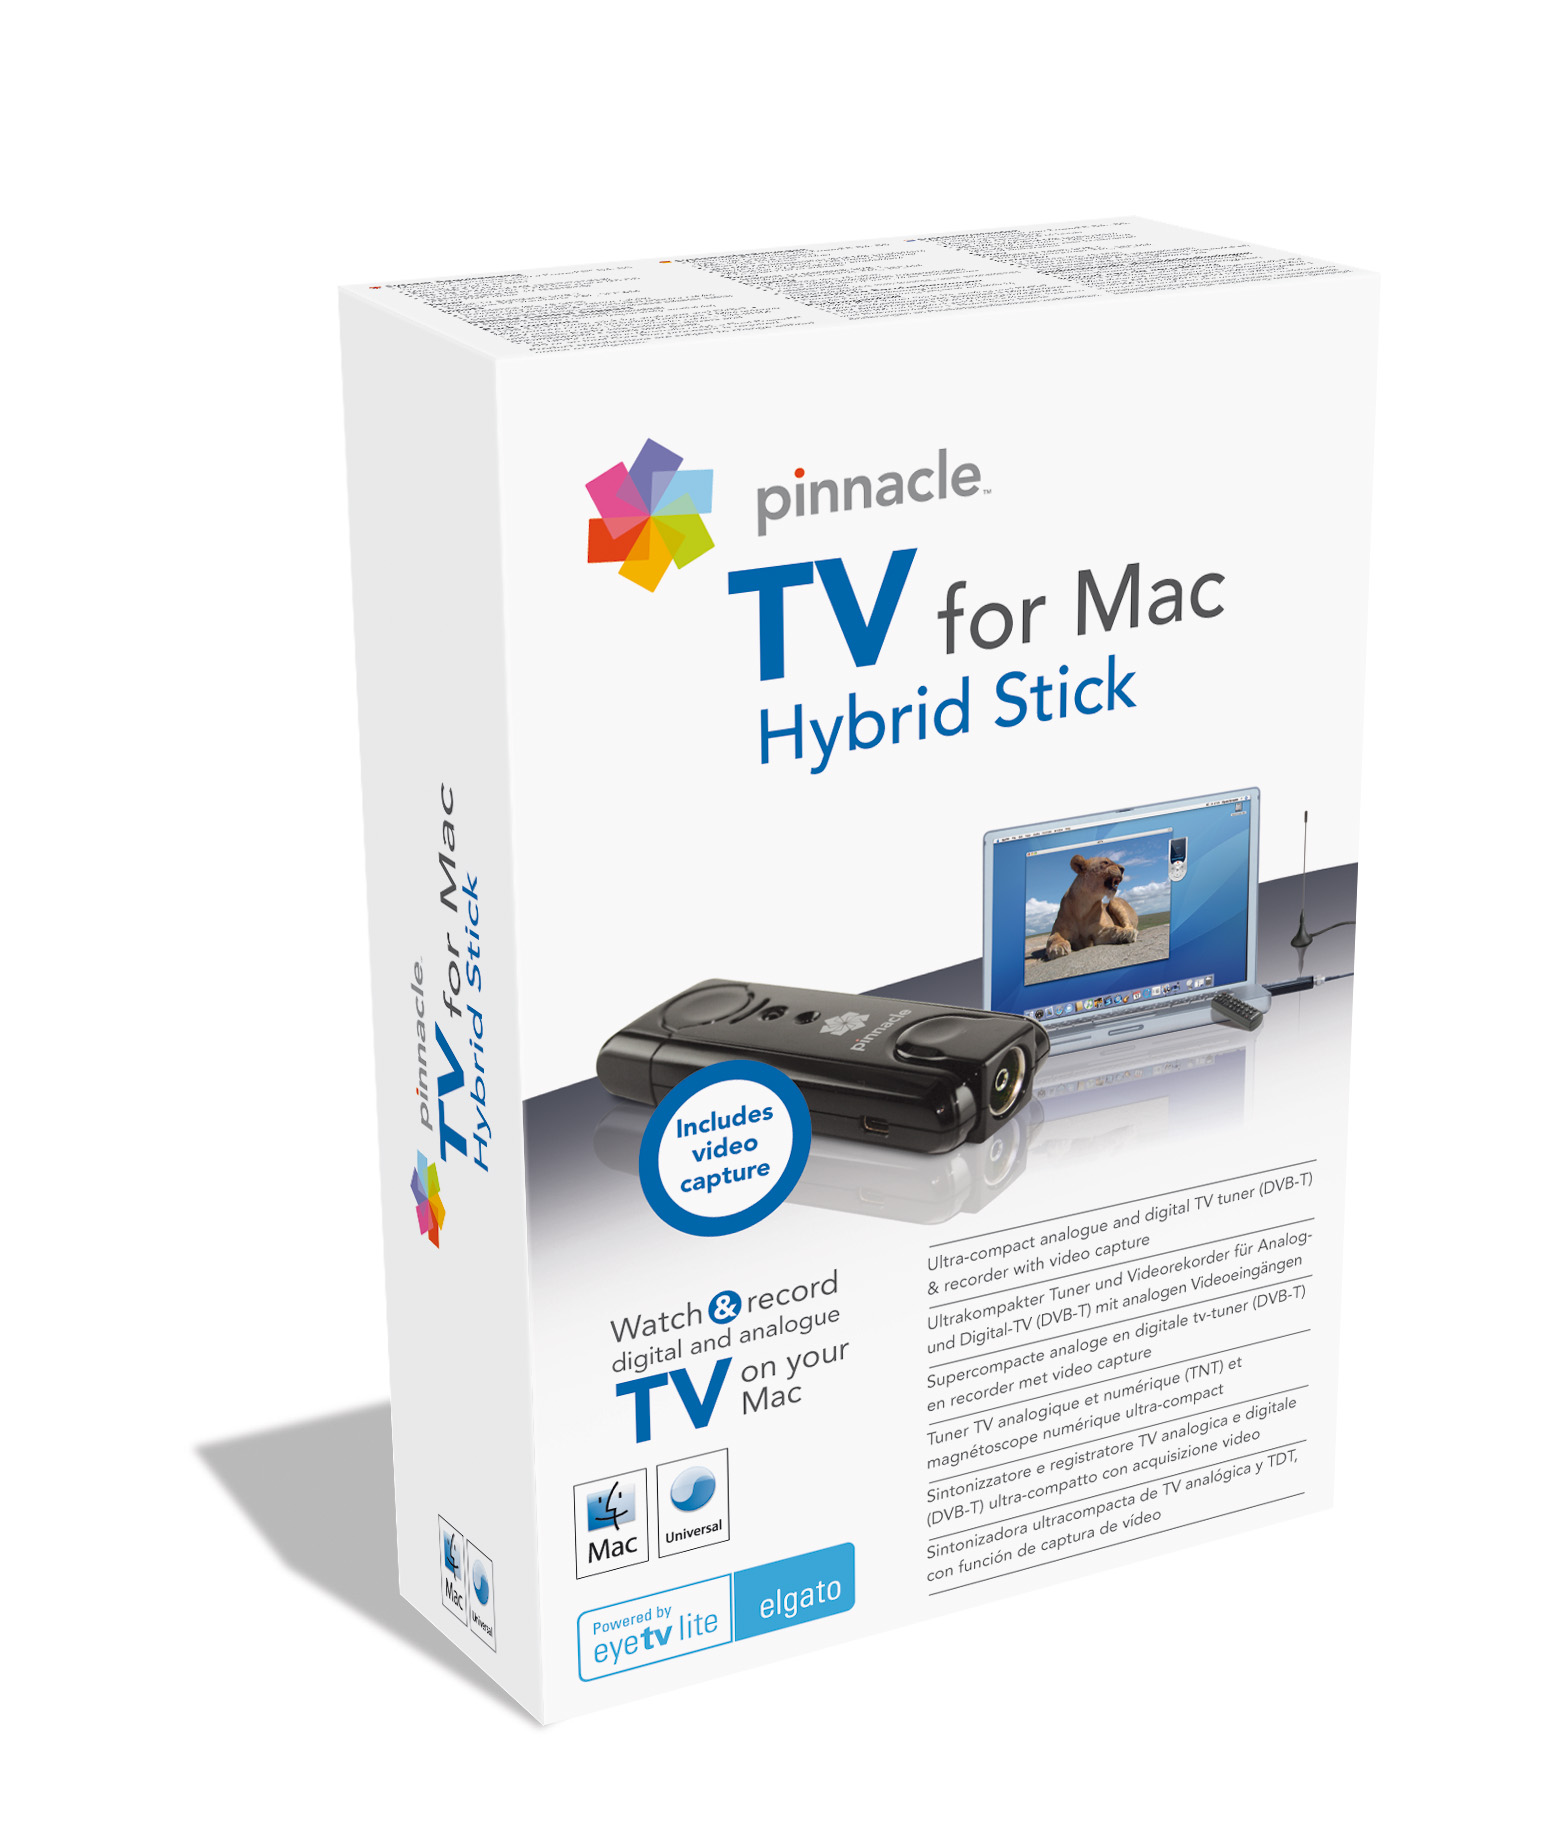 Hybrid stick. TV for Mac Hybrid Stick Pinnacle. Pinnacle PCTV Hybrid Pro Stick 330e. Pinnacle 330e.